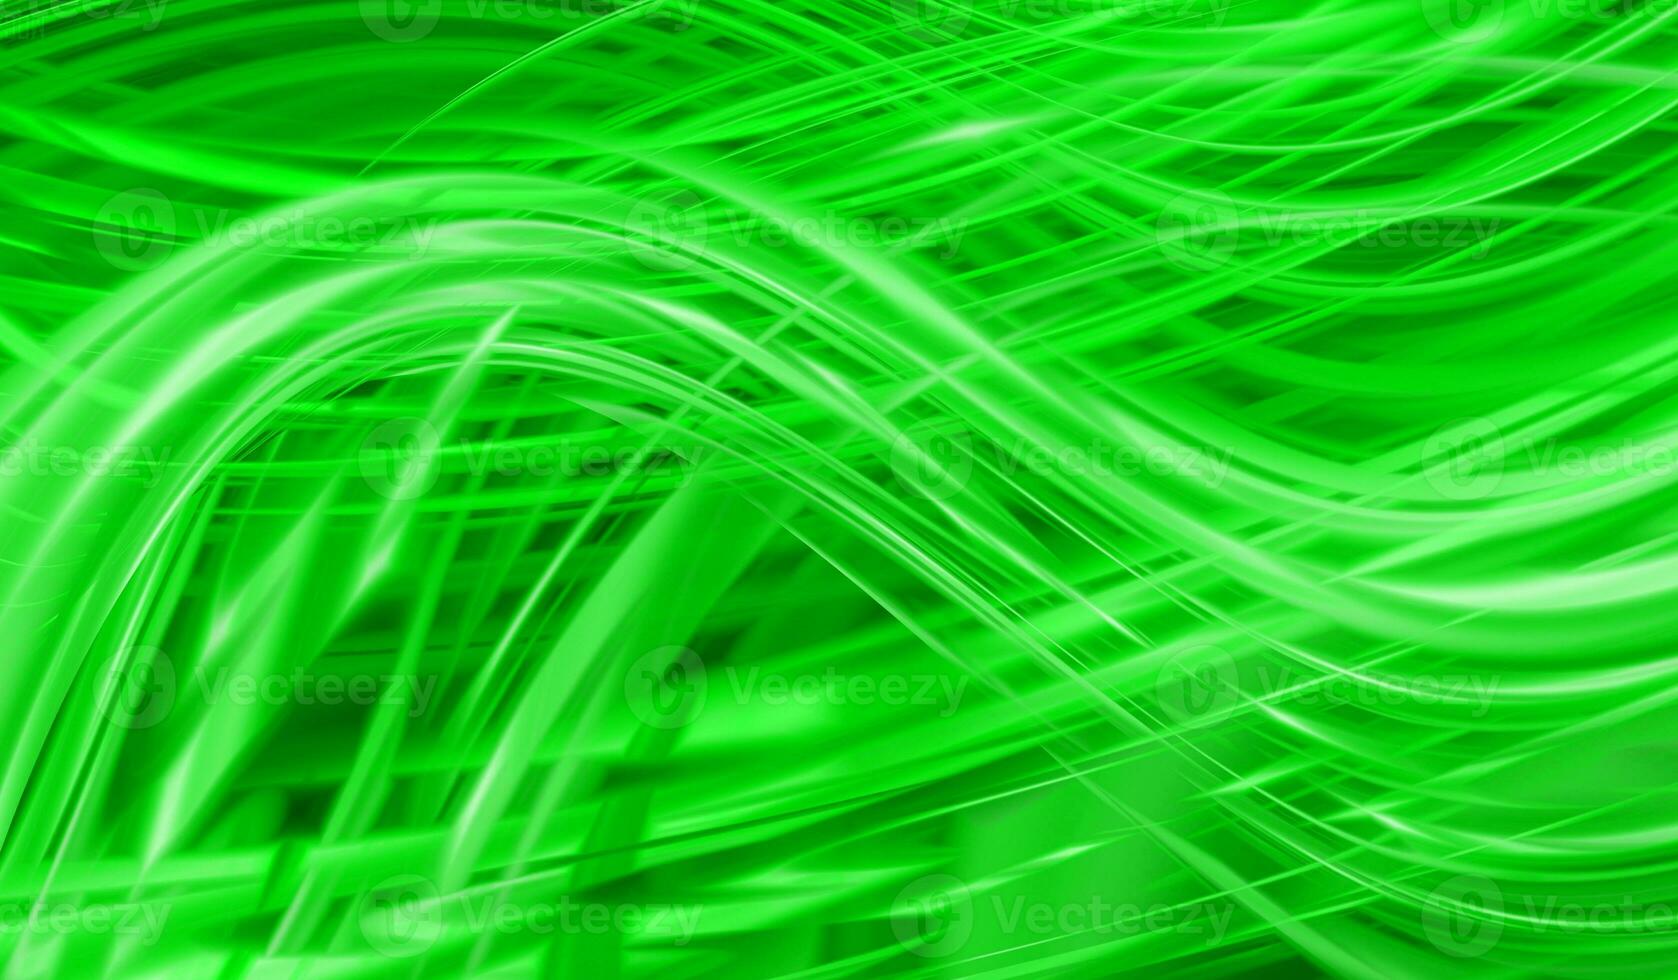 ljus grön textur abstrakt bakgrund foto